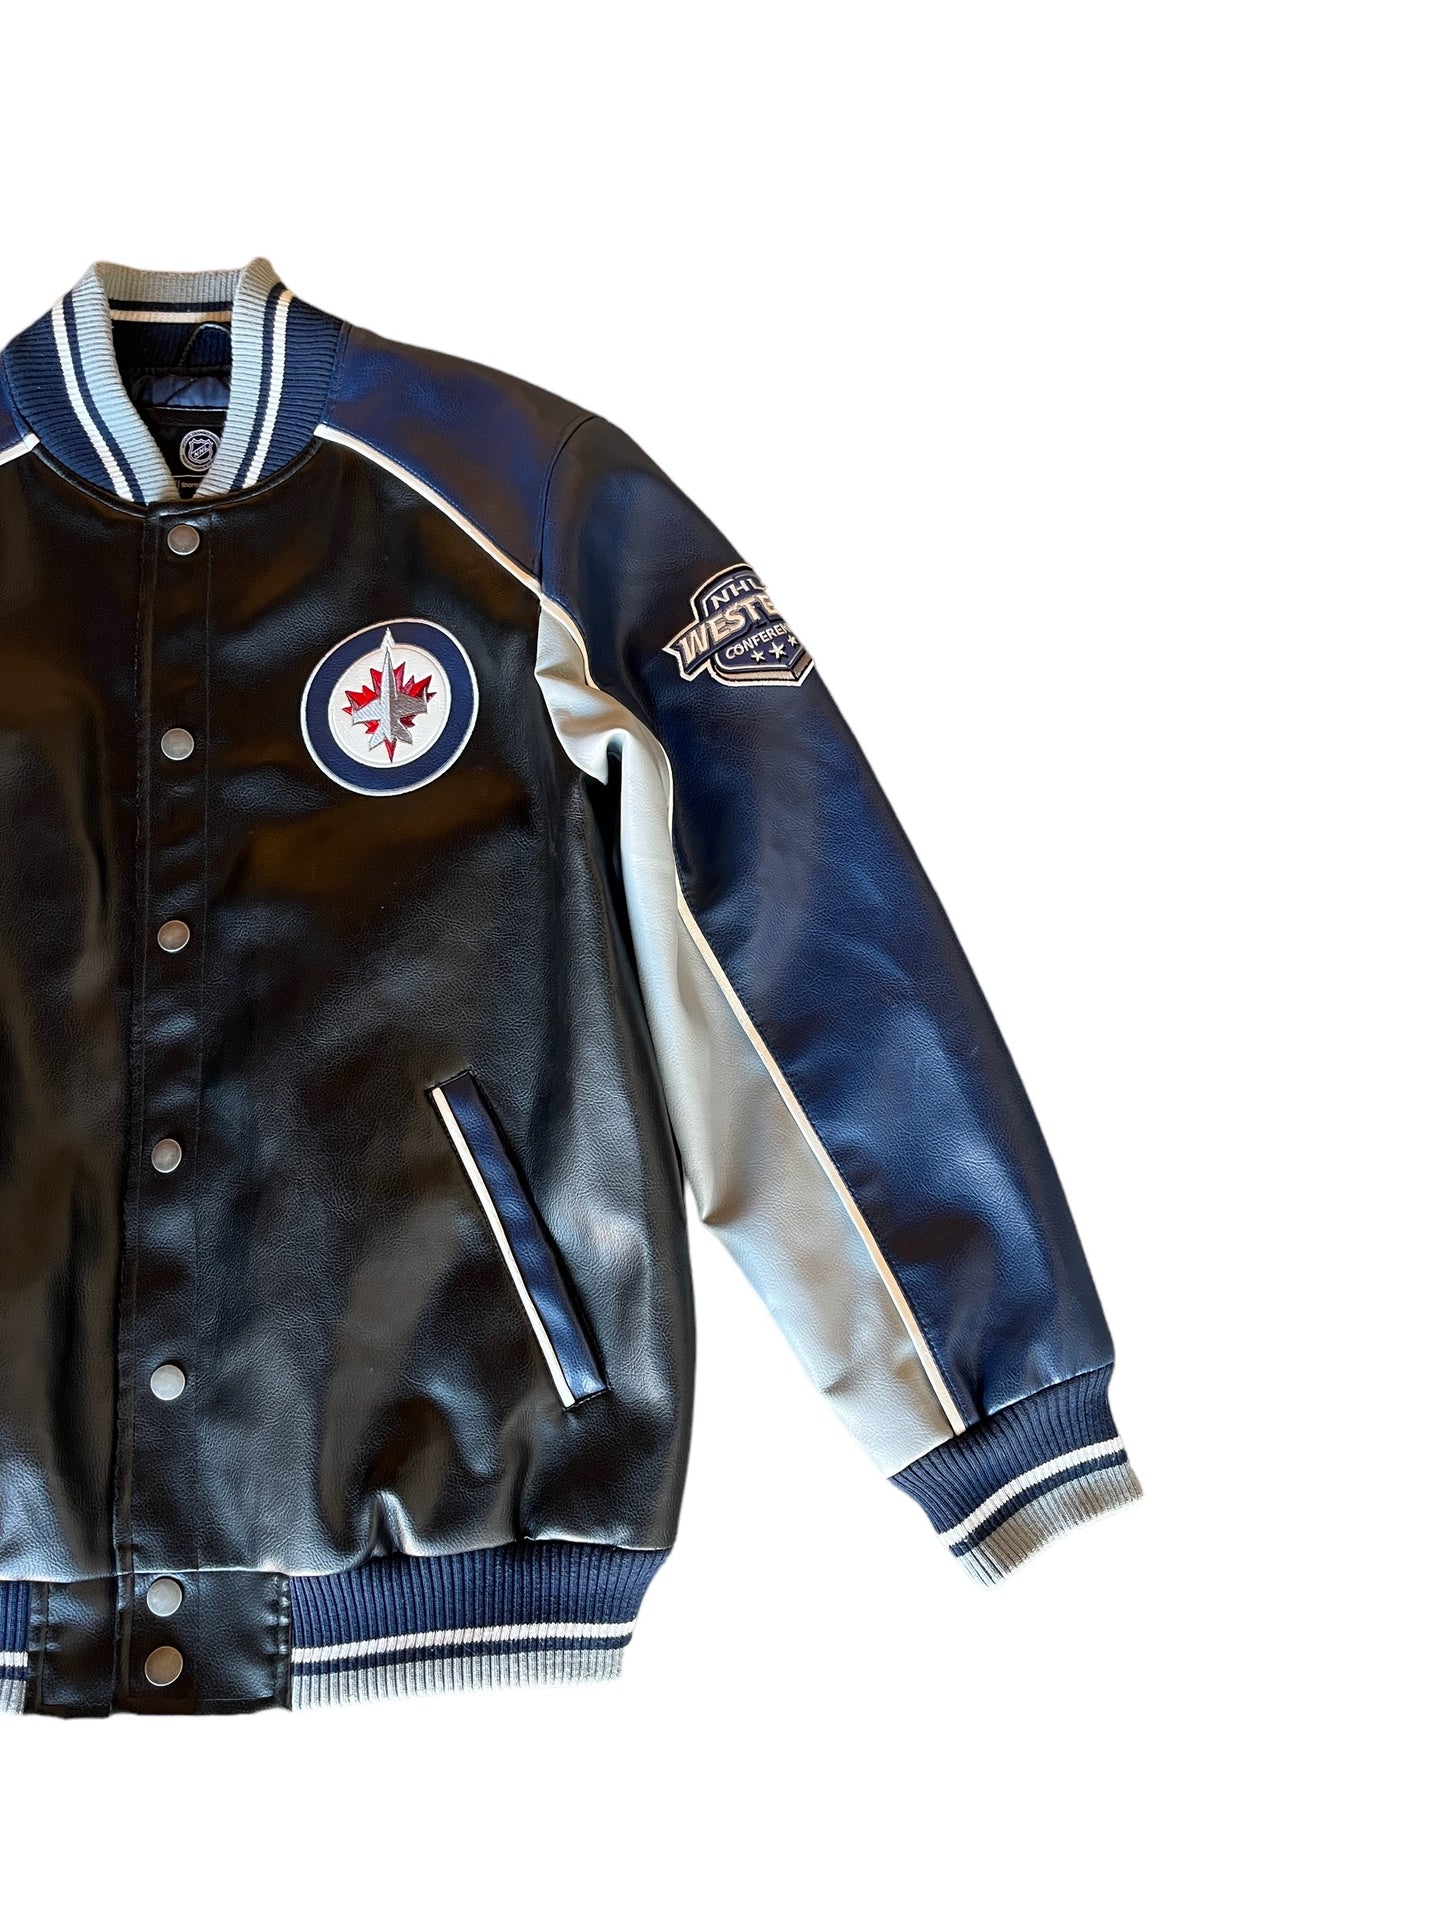 Rare NHL Winnipeg Jets Leather Bomber Jacket